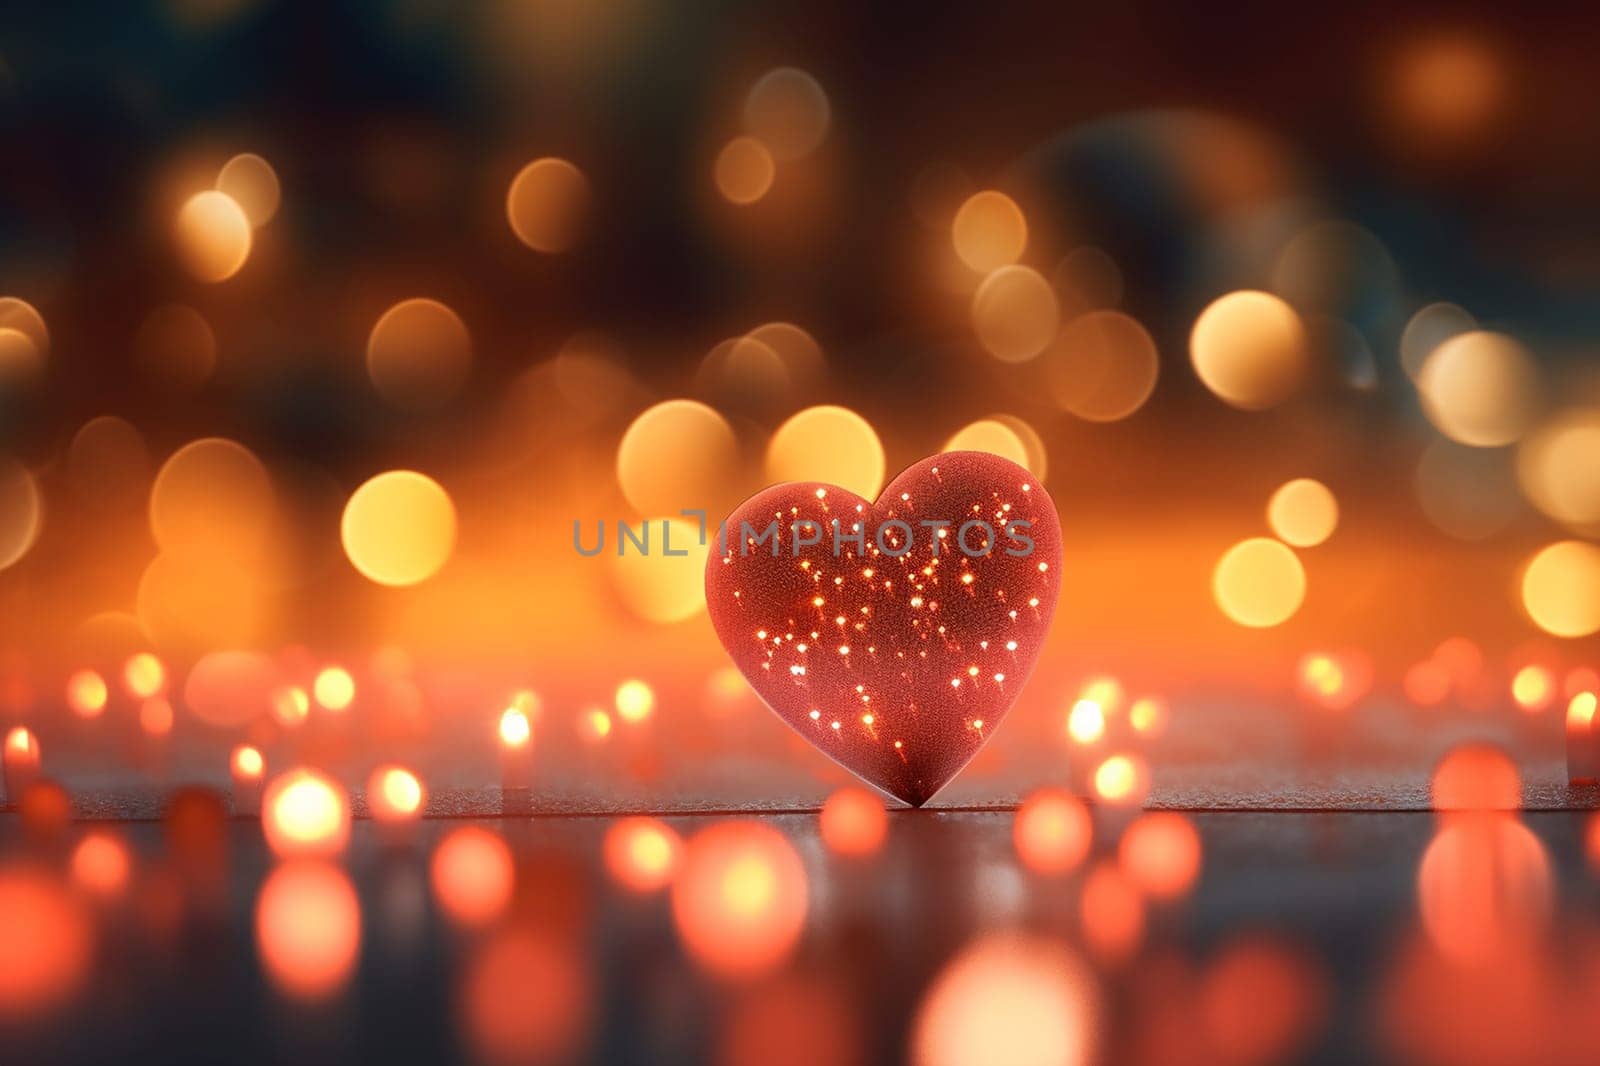 Illuminated heart shape glowing amid warm bokeh lights. by Hype2art